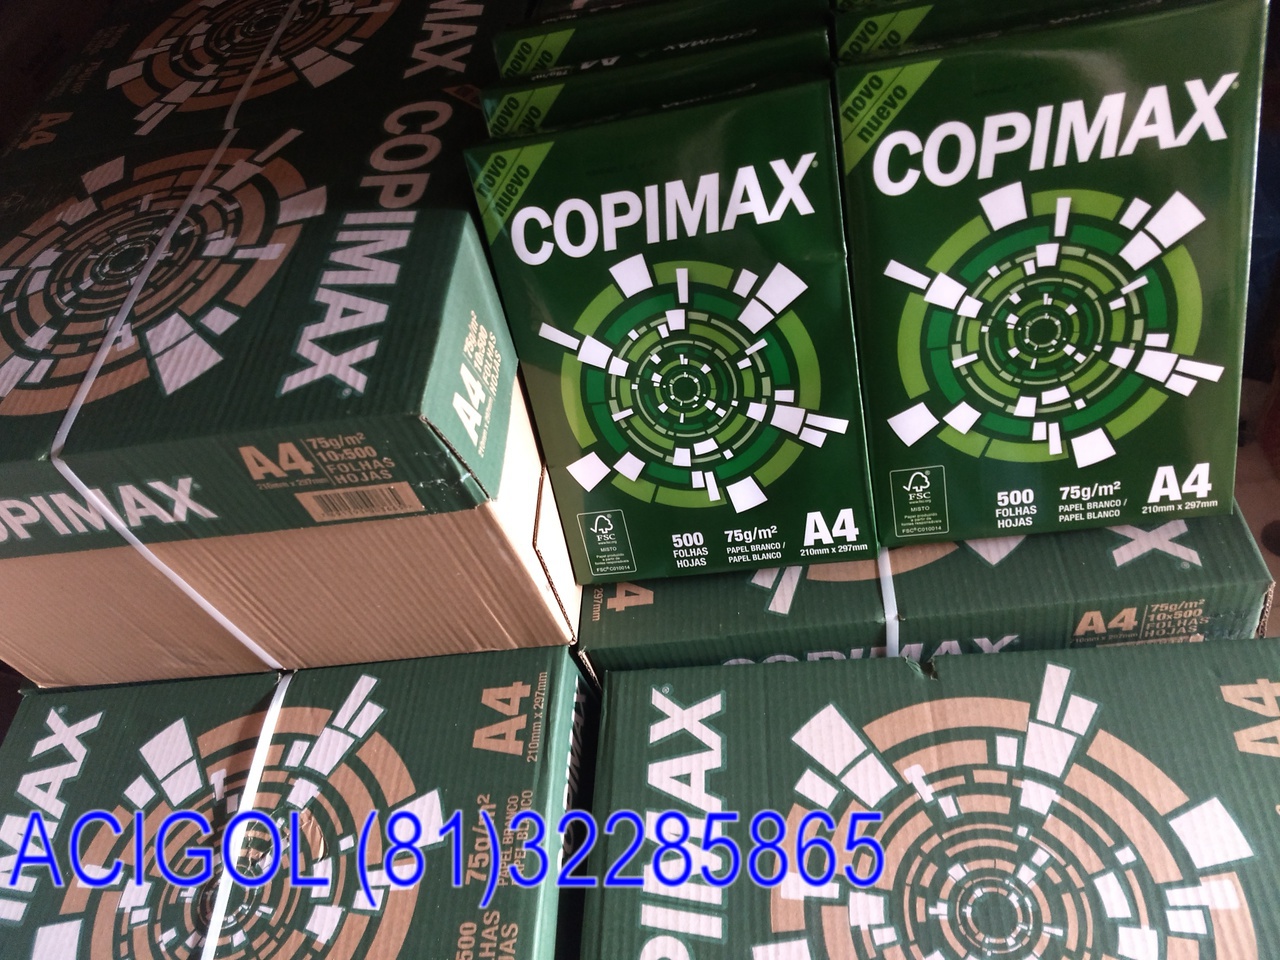 PAPEL A4 COPIMAX-ACIGOL RECIFE 81 32285865-IMG_20180828_135853628_LL